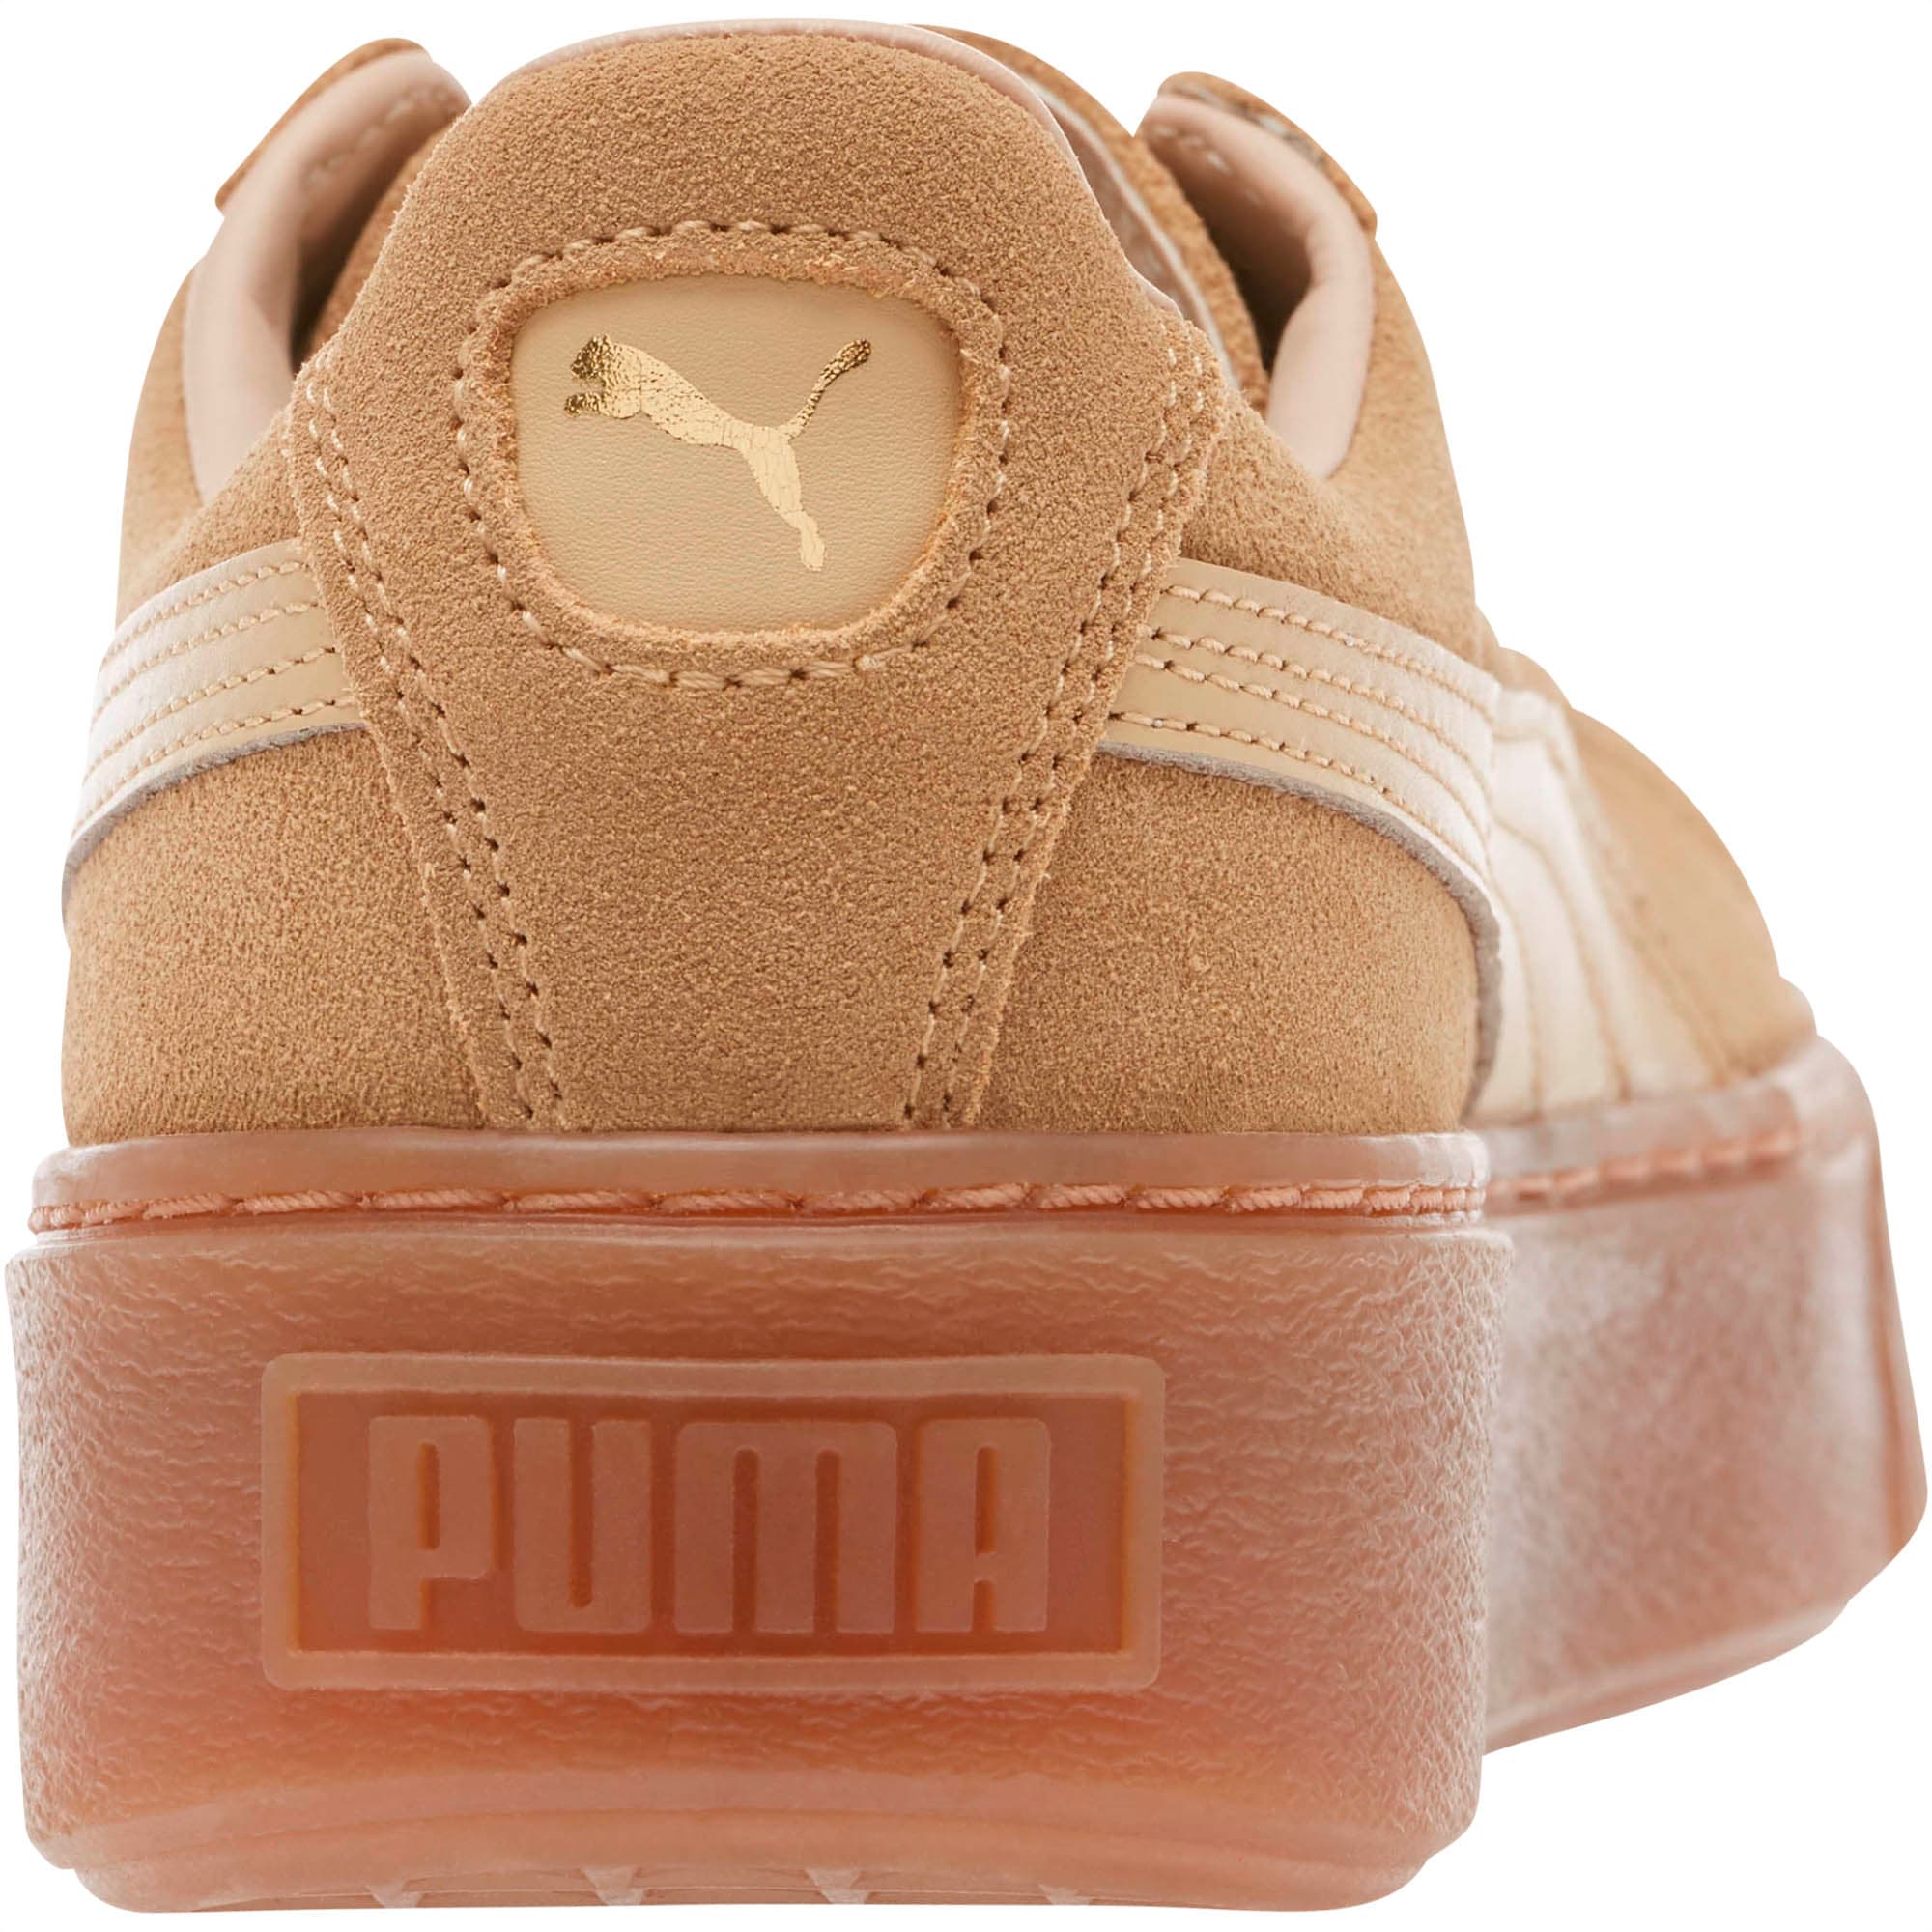 puma women's suede platform core fashion sneaker